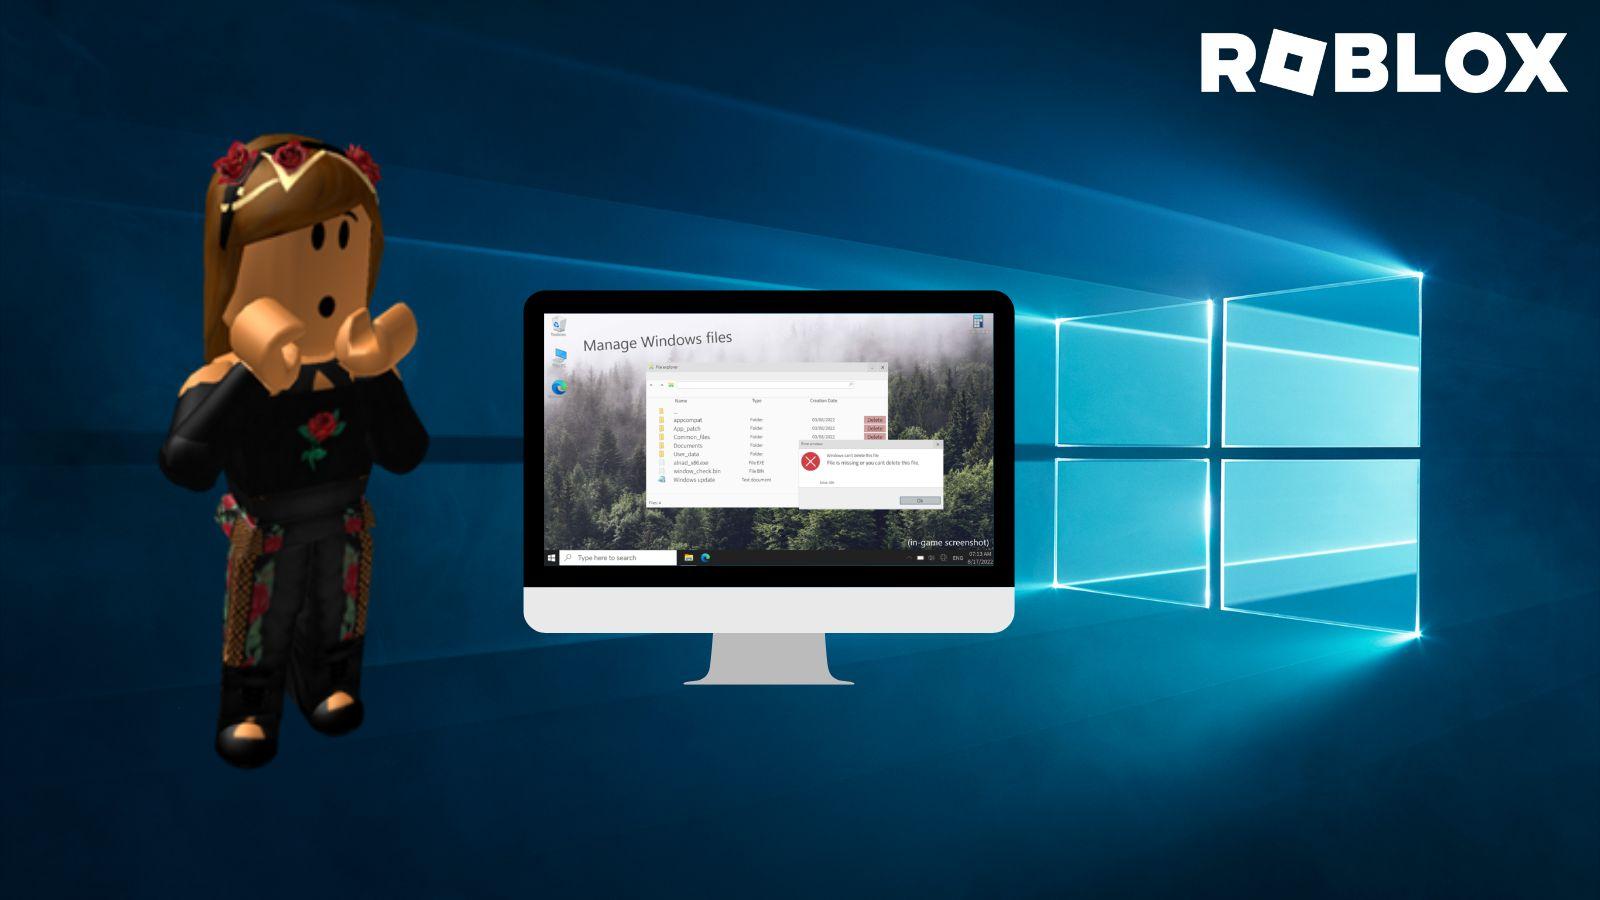 Windows 10 in Roblox? 